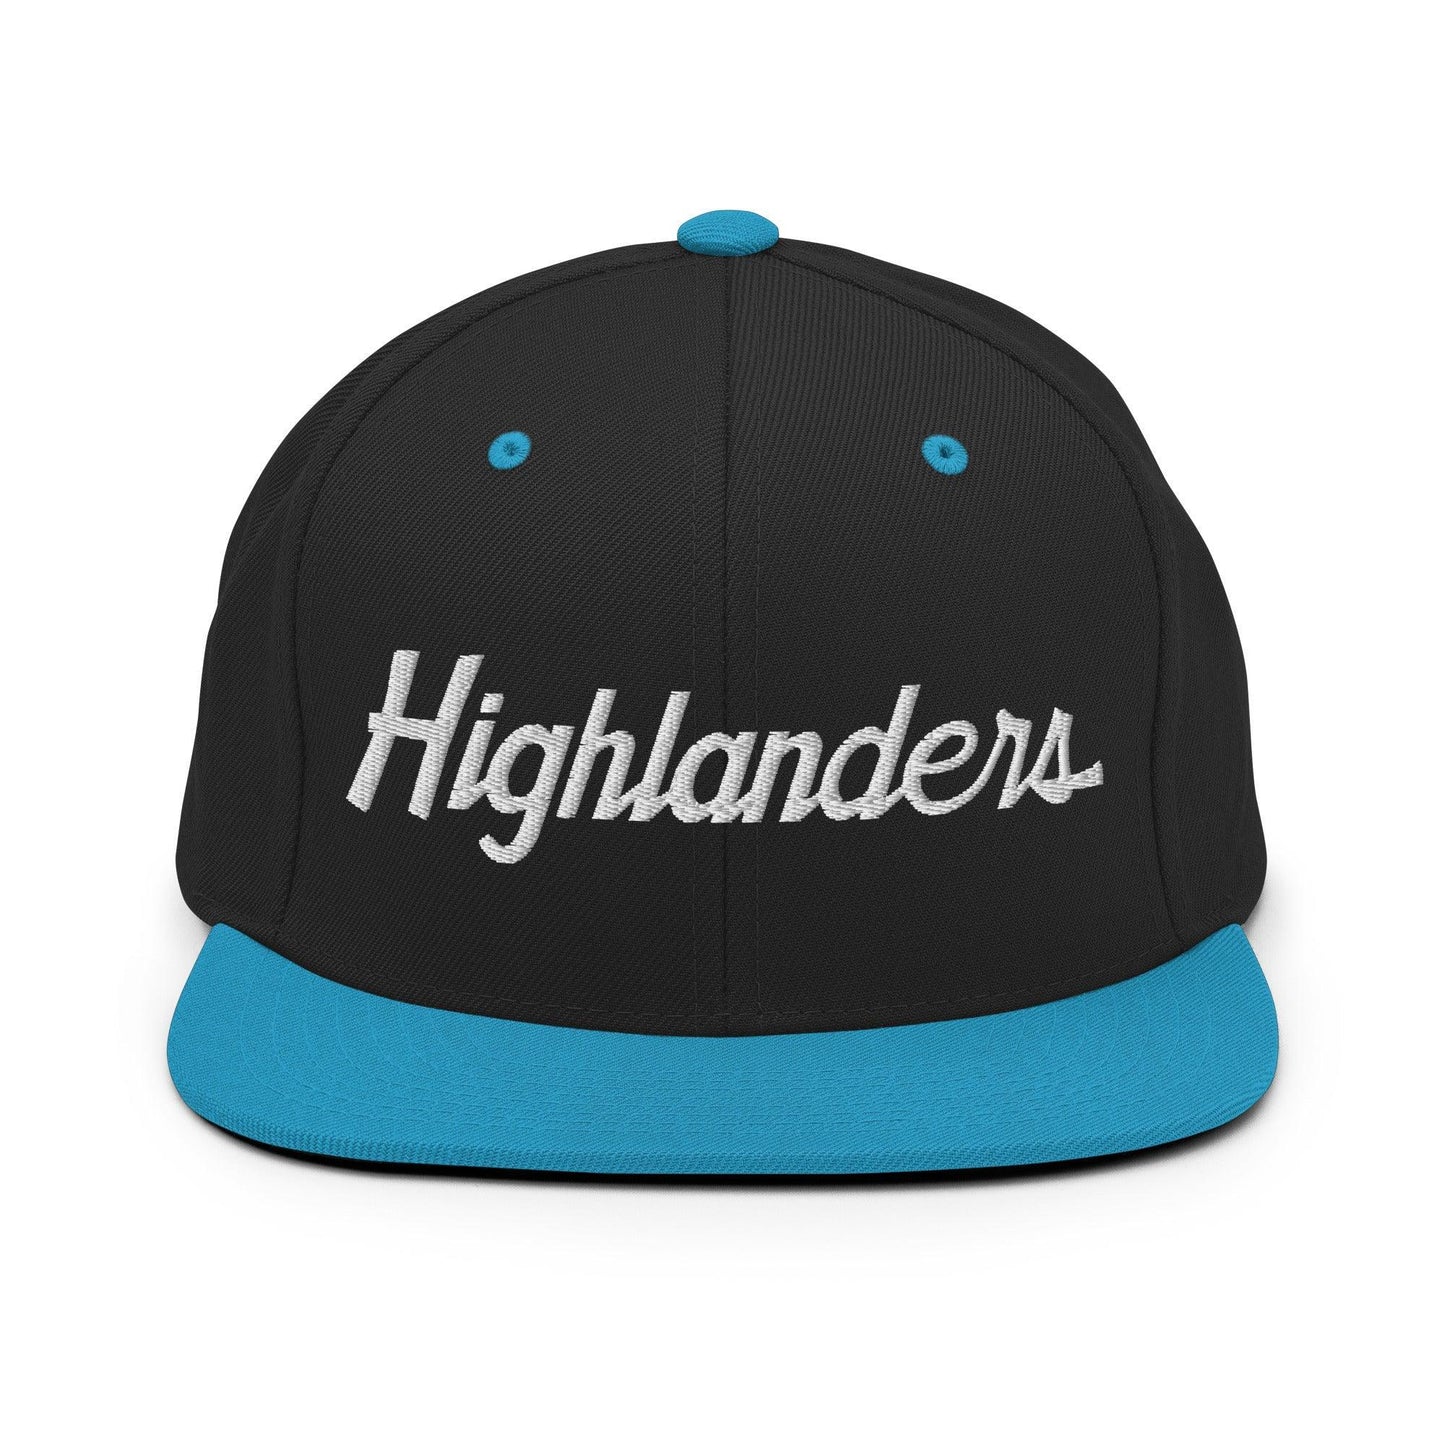 Highlanders School Mascot Script Snapback Hat Black Teal